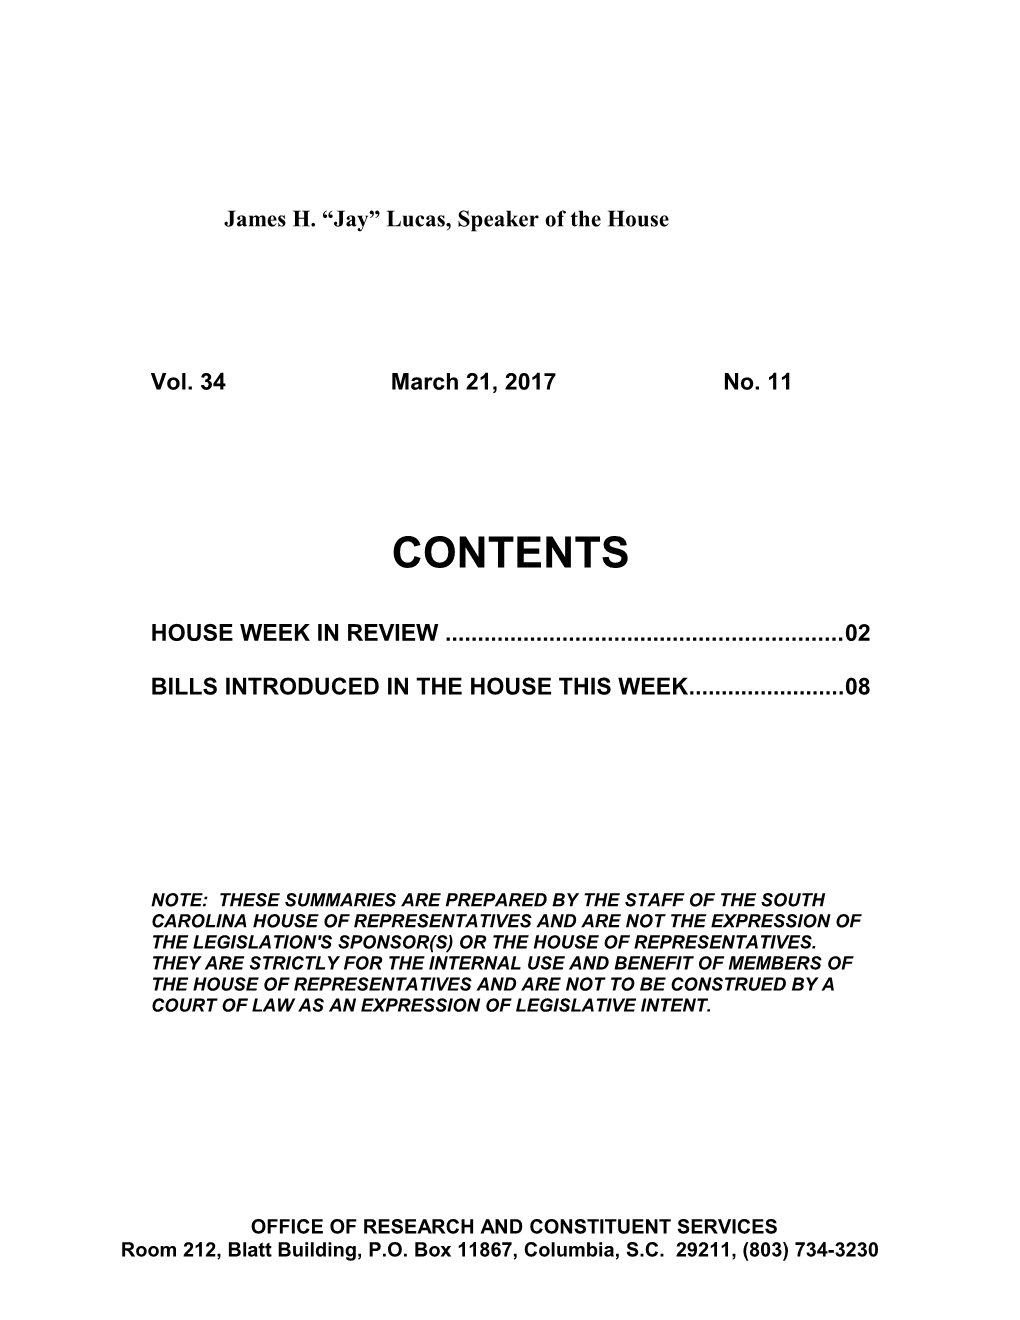 Legislative Update - Vol. 34 No. 11 March 21, 2017 - South Carolina Legislature Online